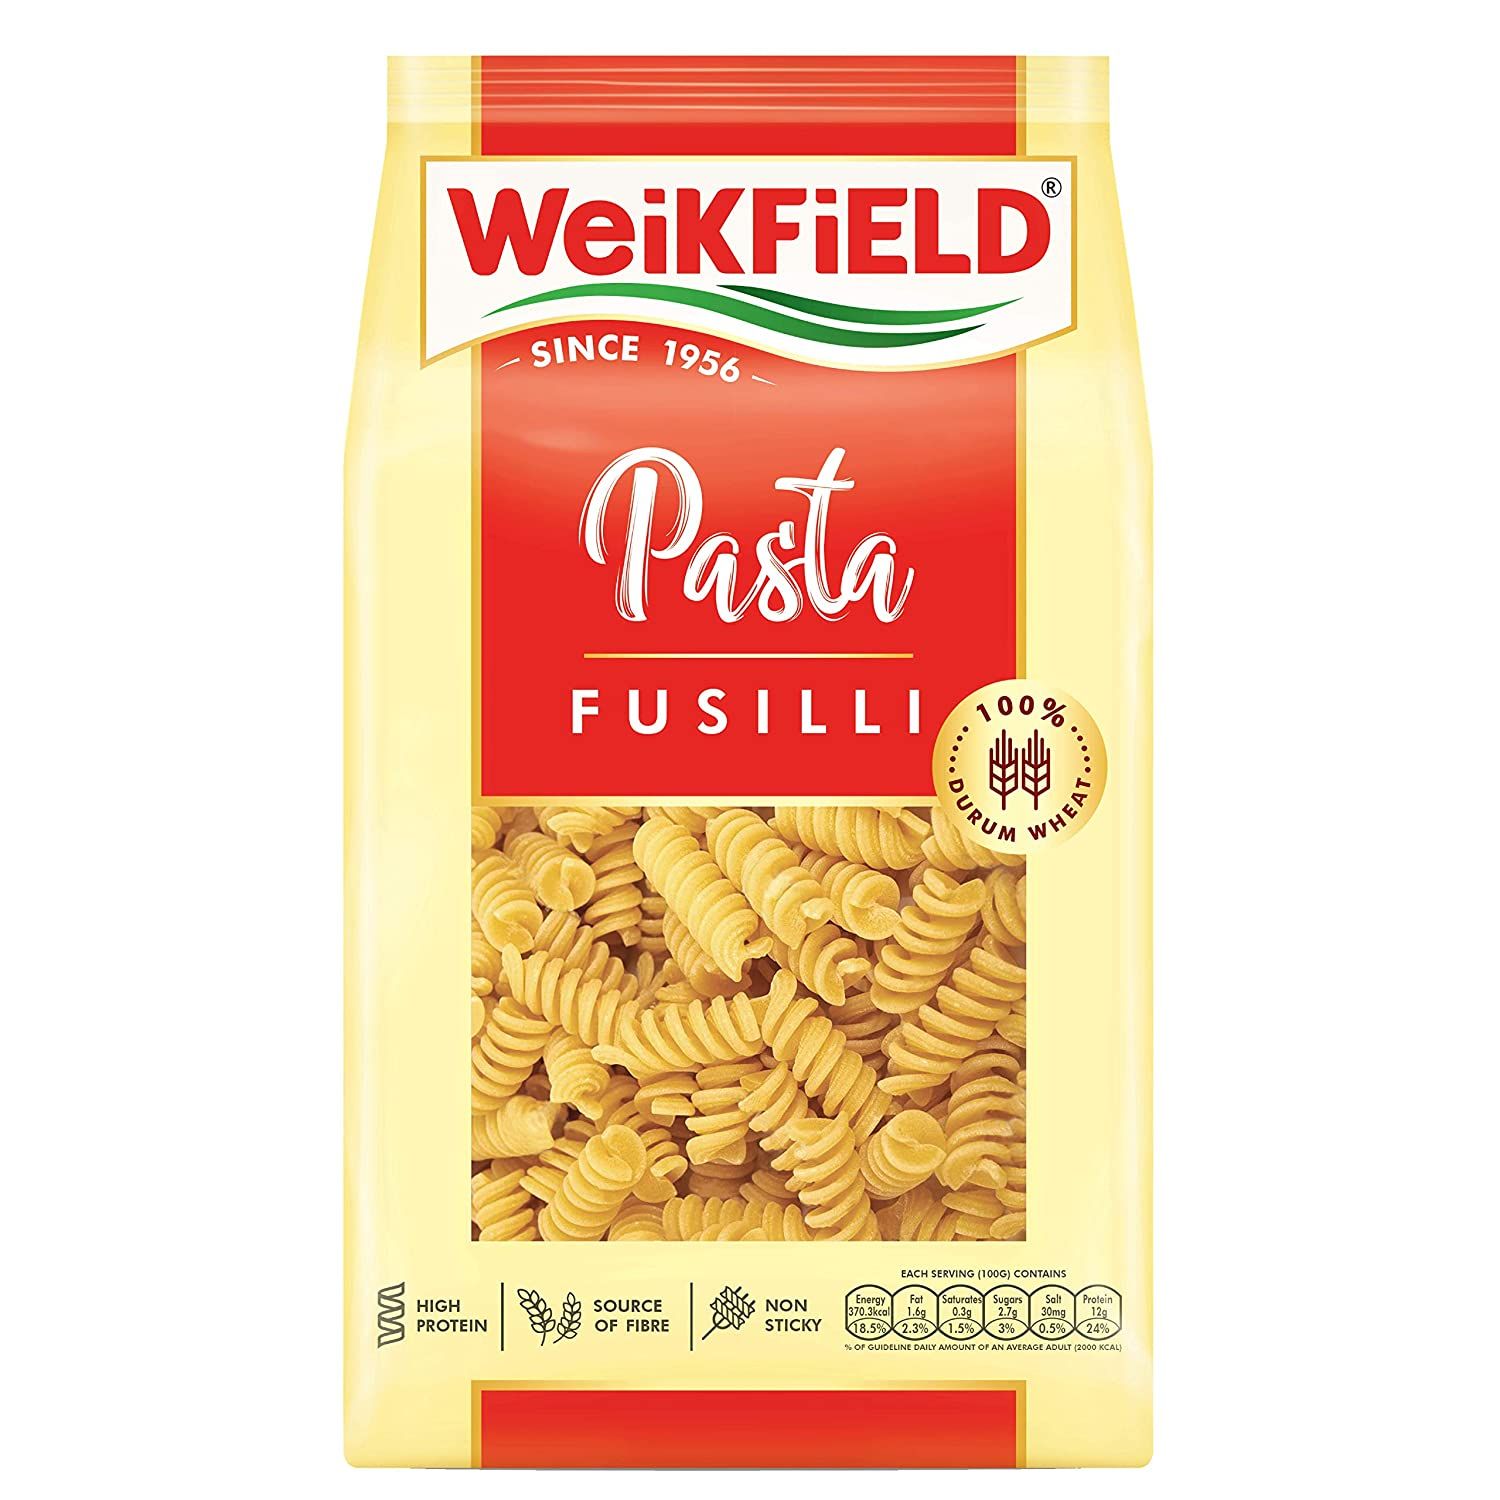 Weikfield Pasta Fusilli Image